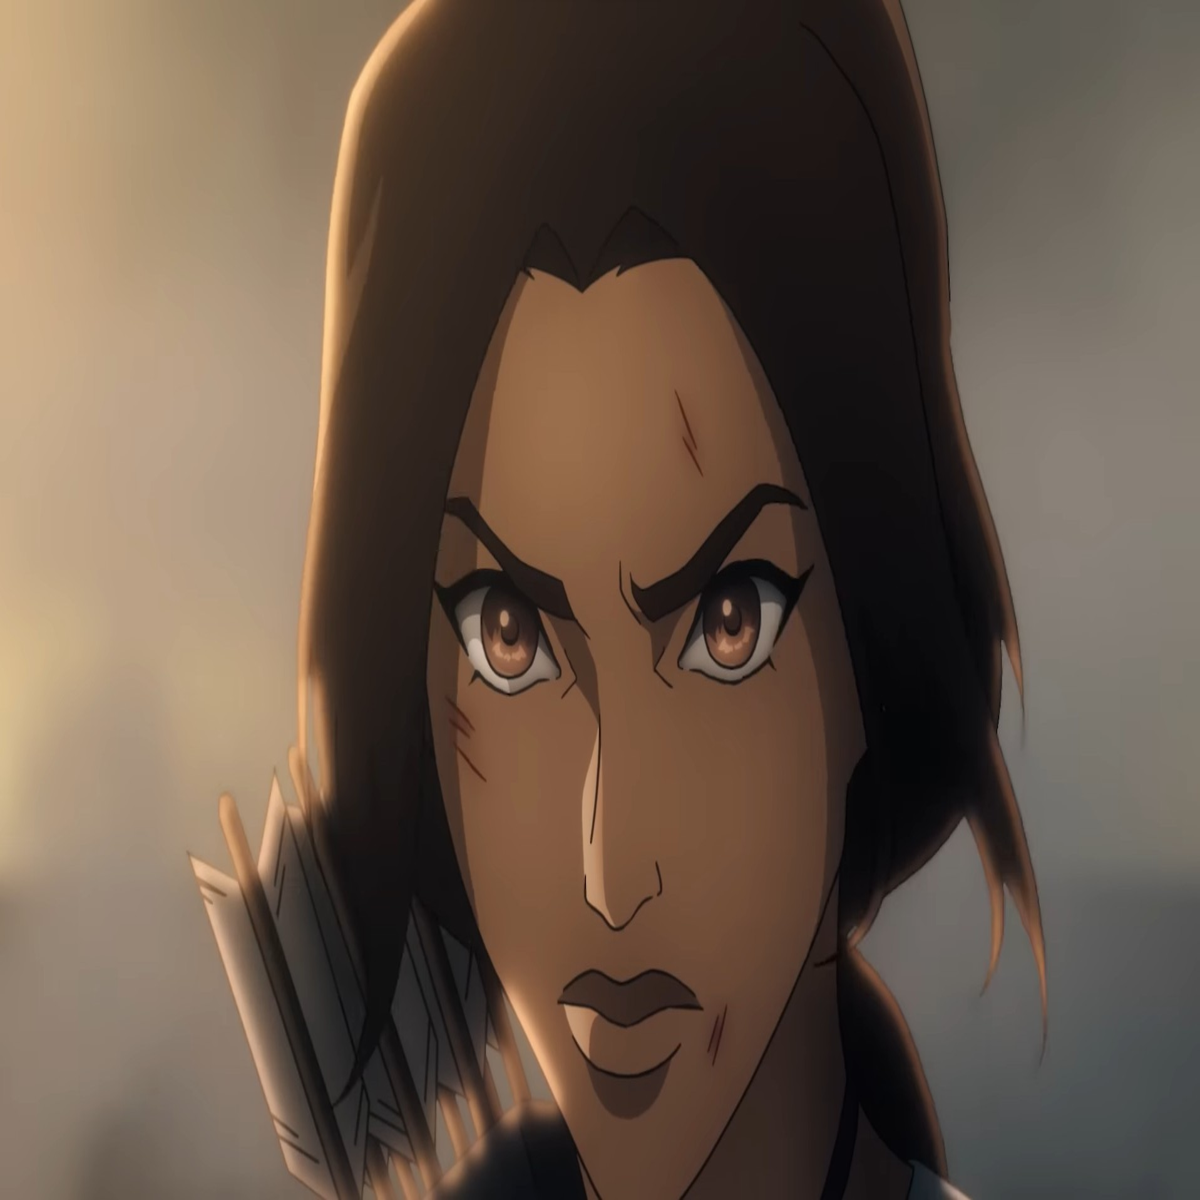 Tomb Raider Anime Netflix - What We Know So Far